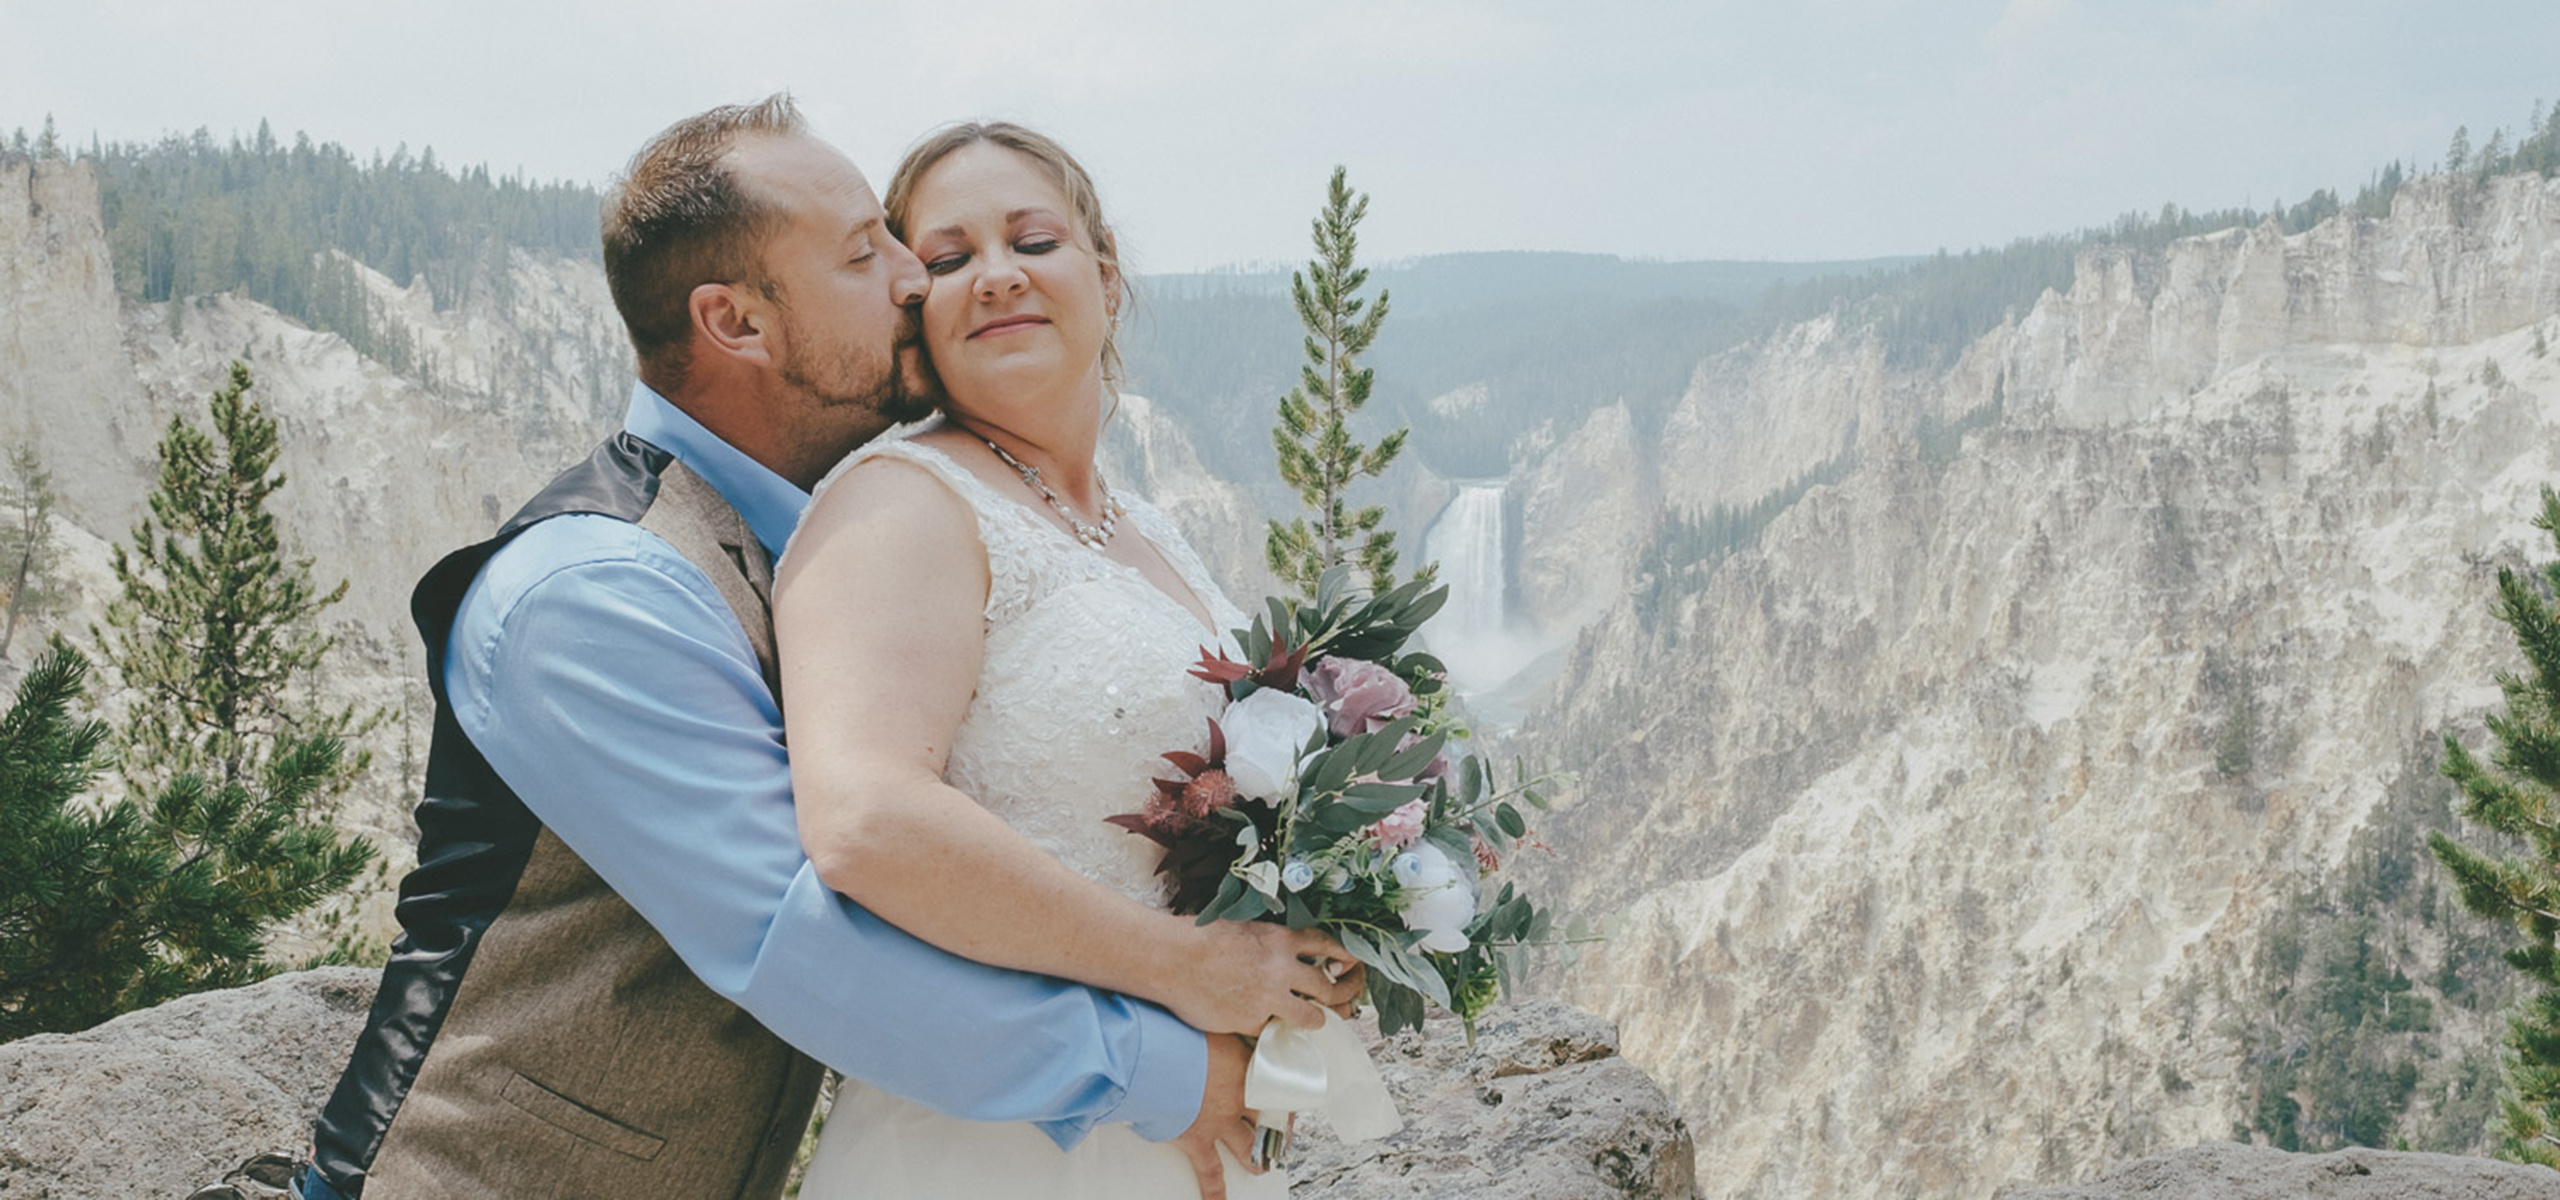 Kalispell Montana Glaicer National Park Micro-Wedding Elopement Photography